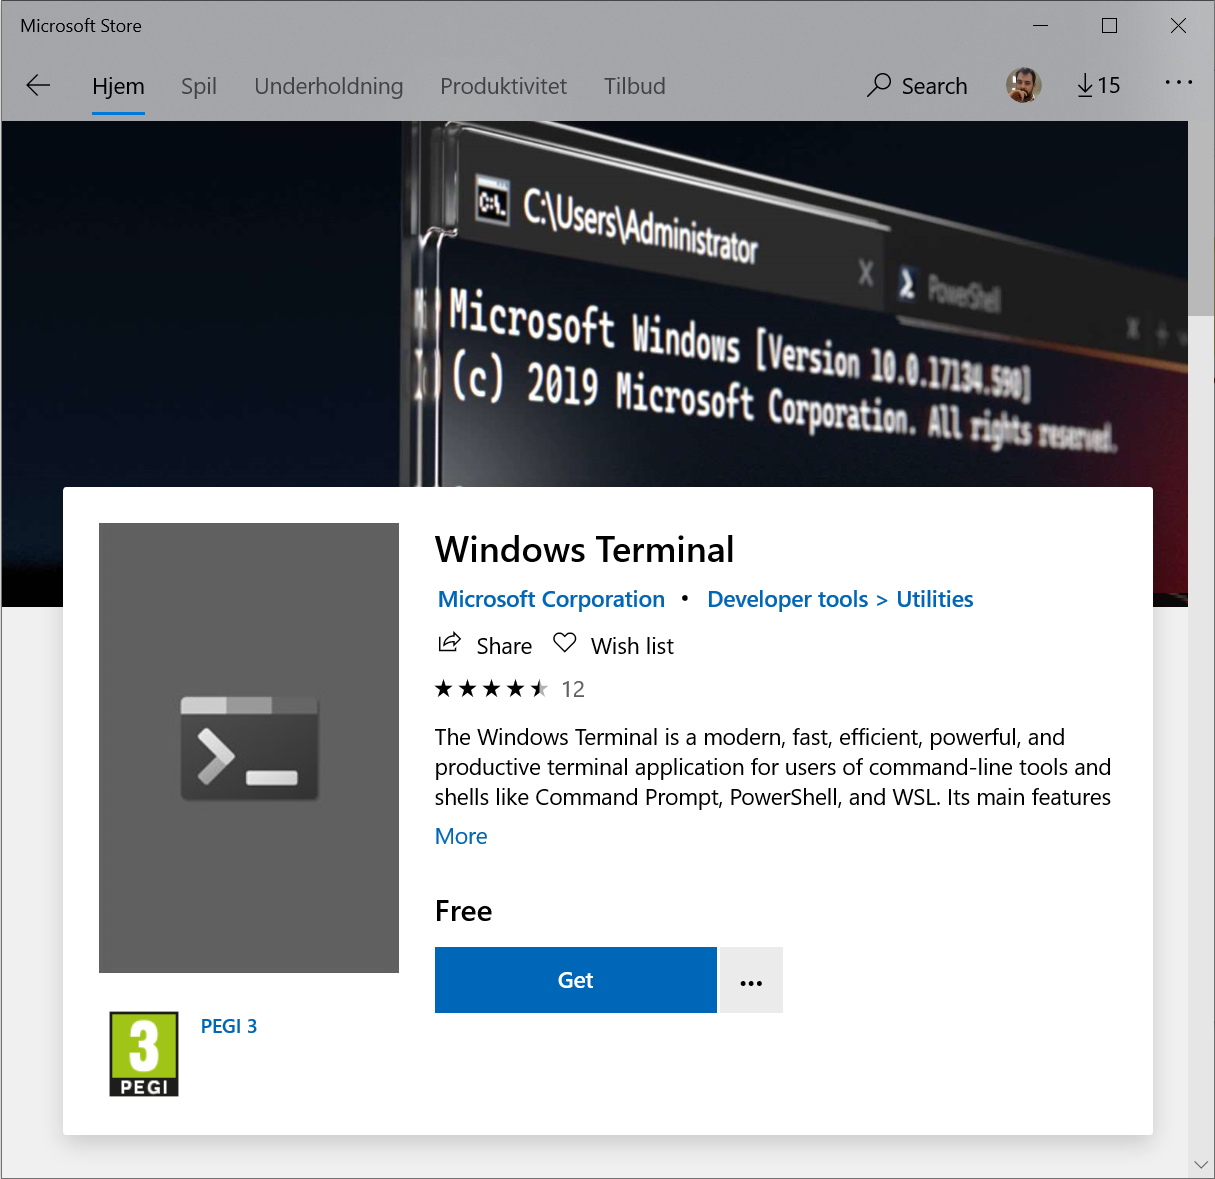 Screenshot of the Windows Terminal app in the Microsoft Store